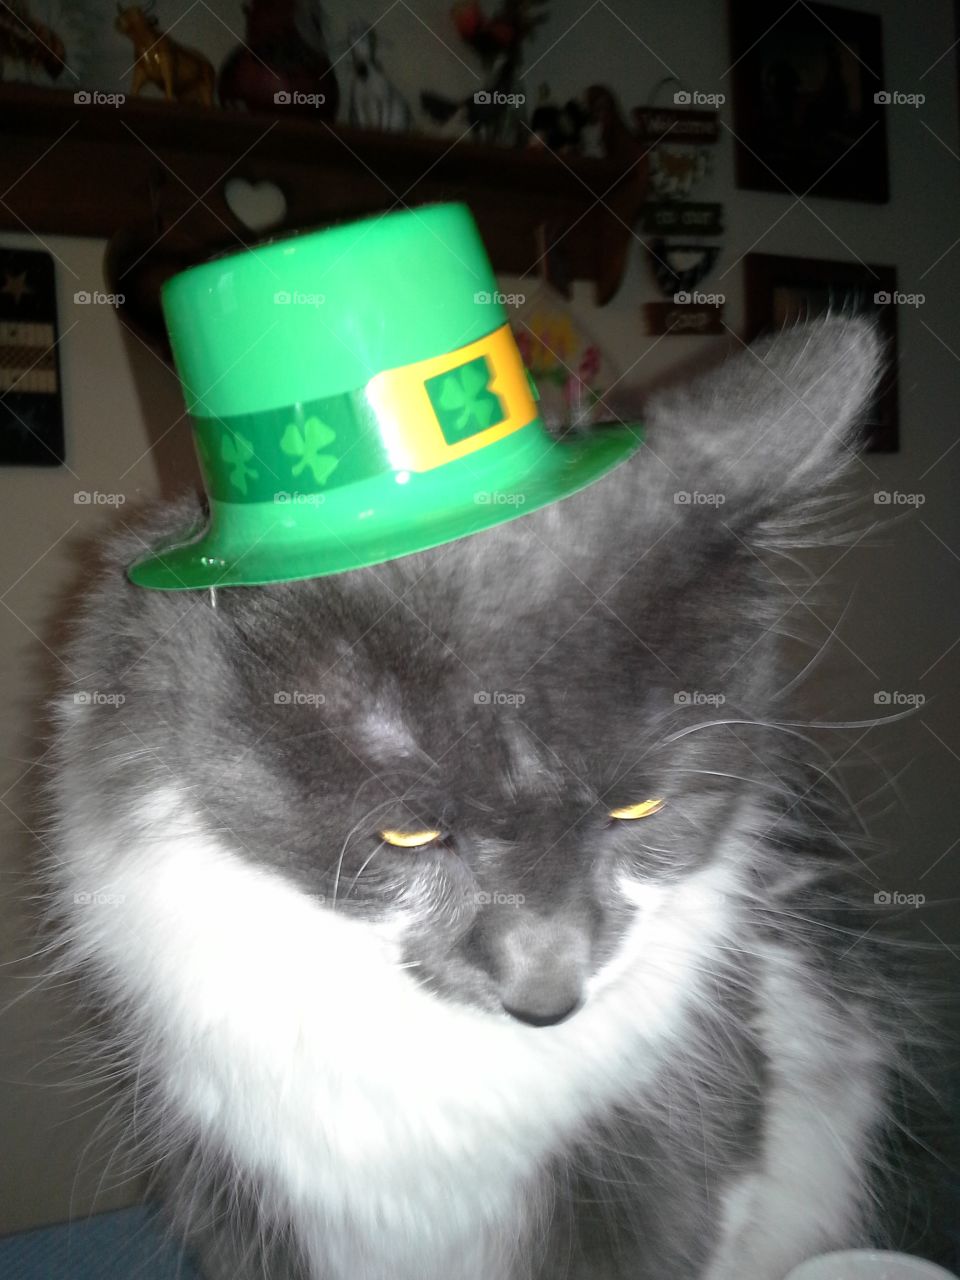 Irish kitty